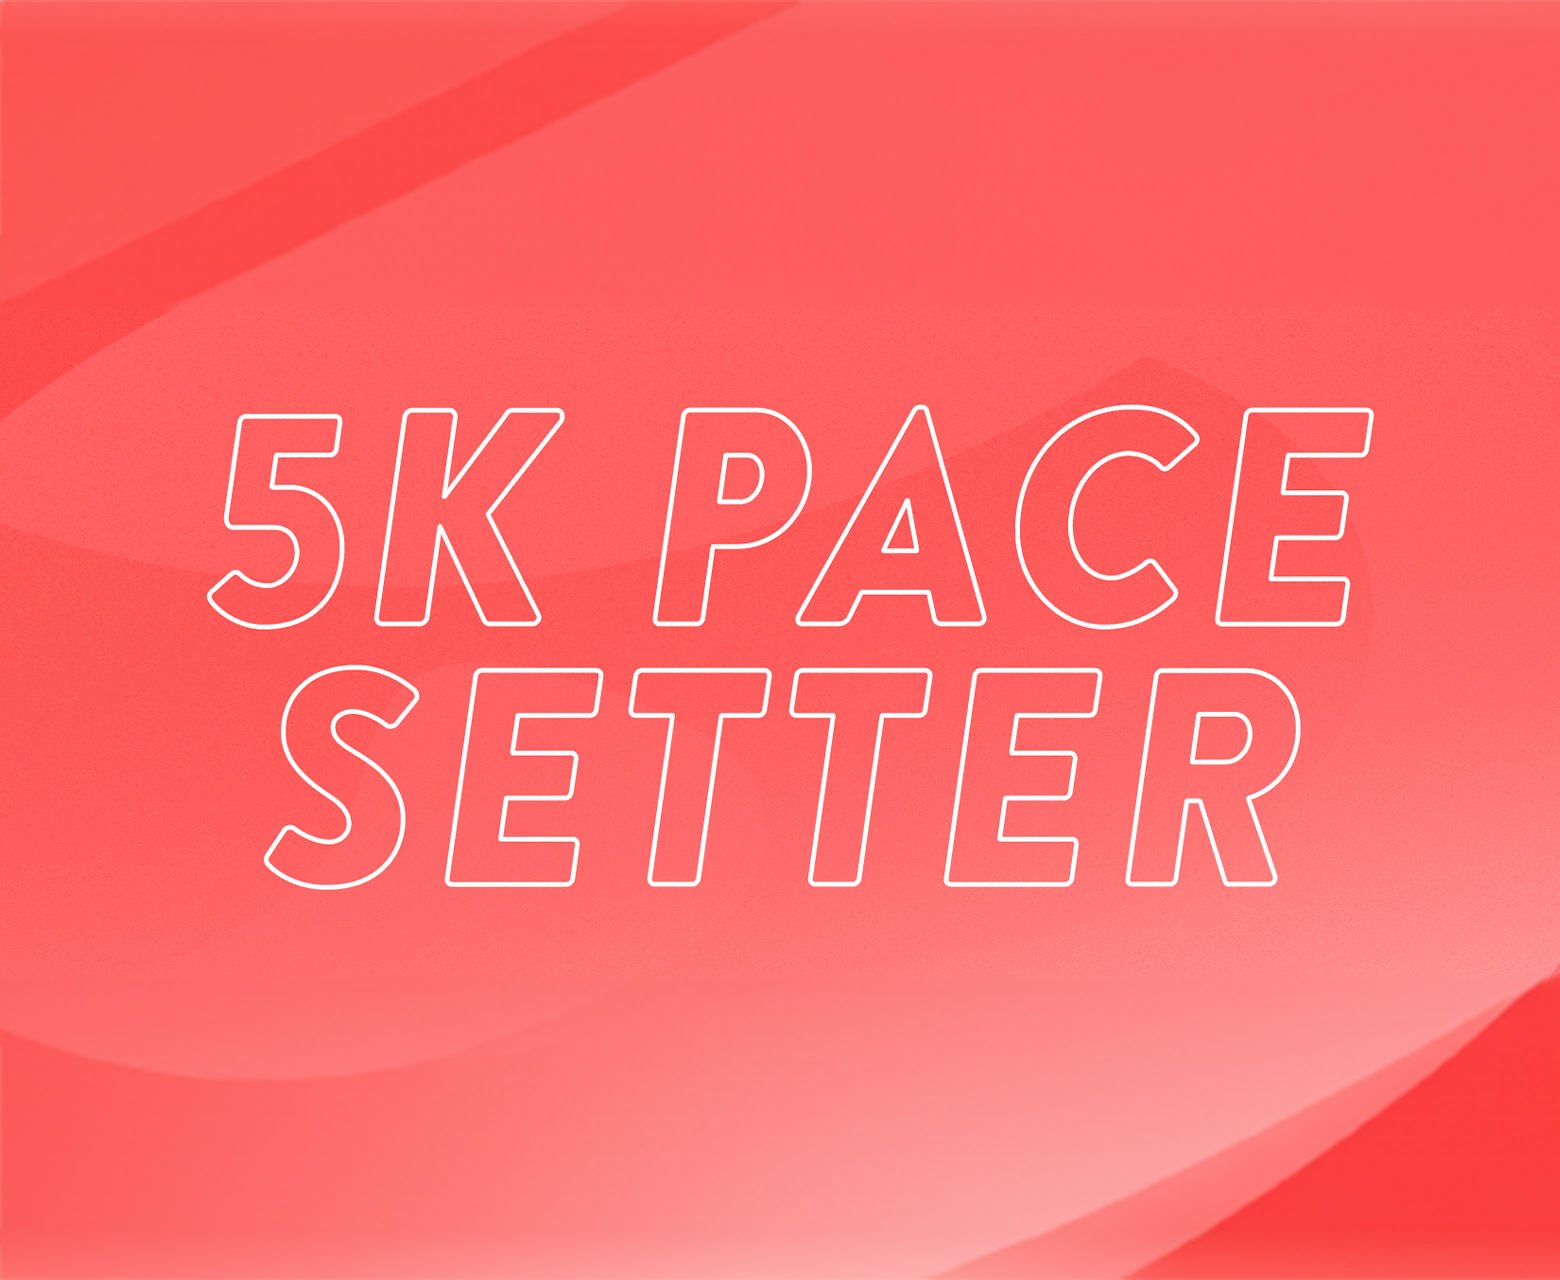 5k Running Pace Workouts | Peloton